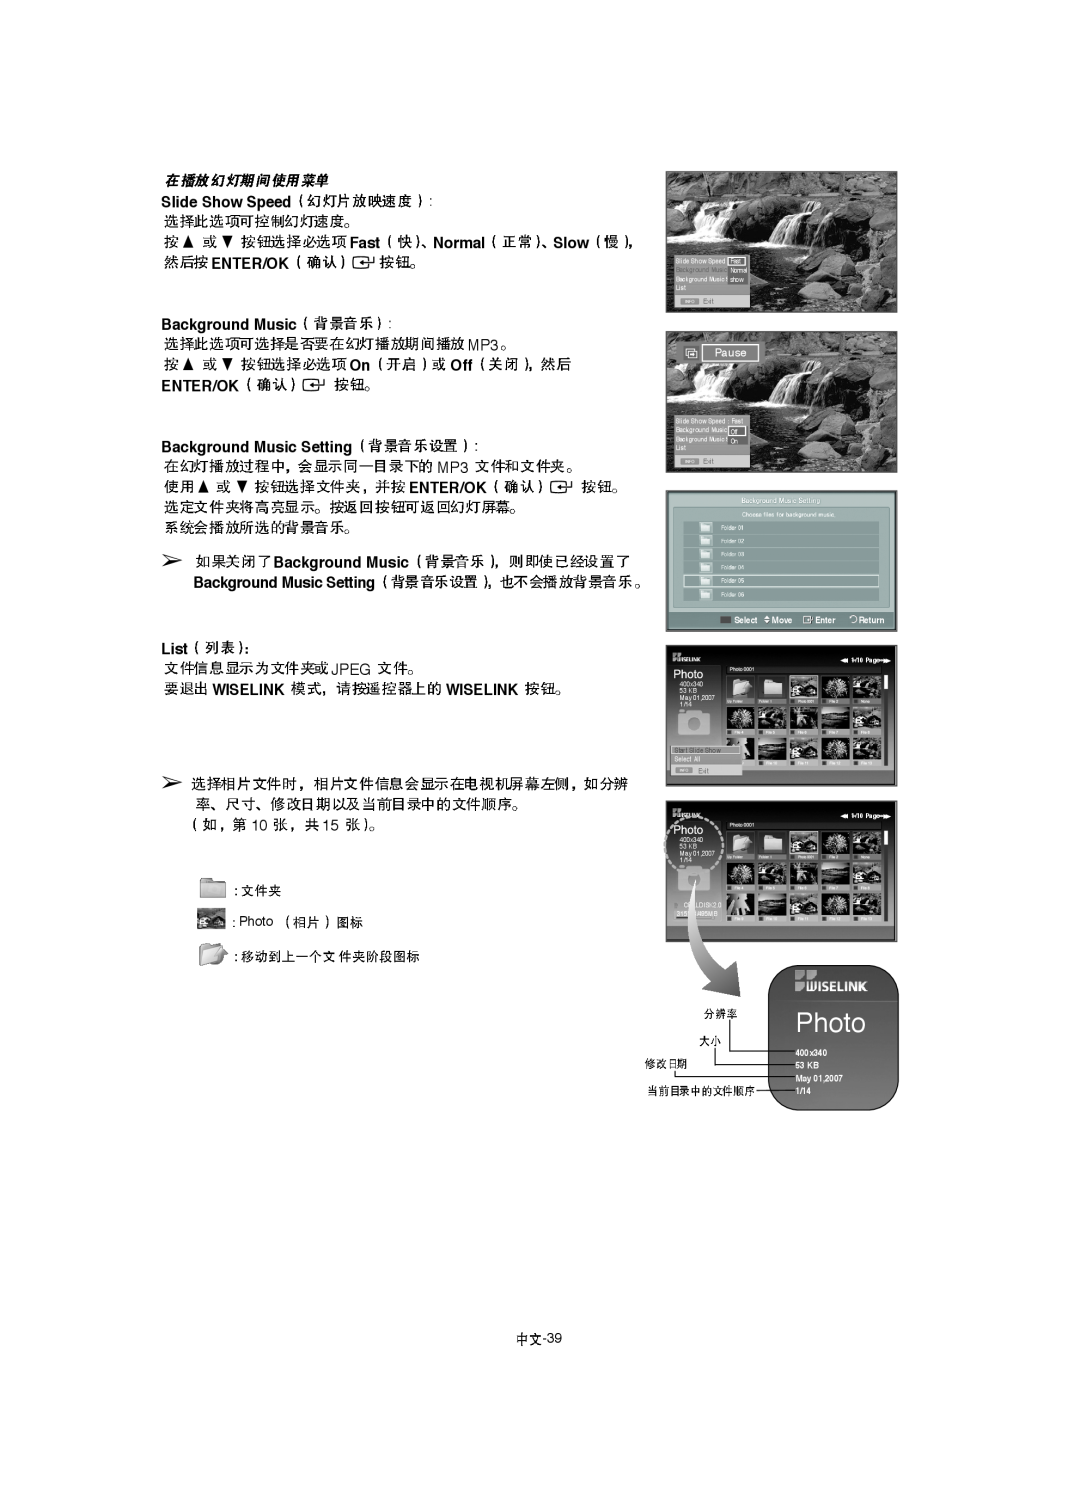 Samsung LA40F8 Photo, Enter/Ok, Background Music Background Music Setting, Pause, Background Music Normal, Exit, 400x340 